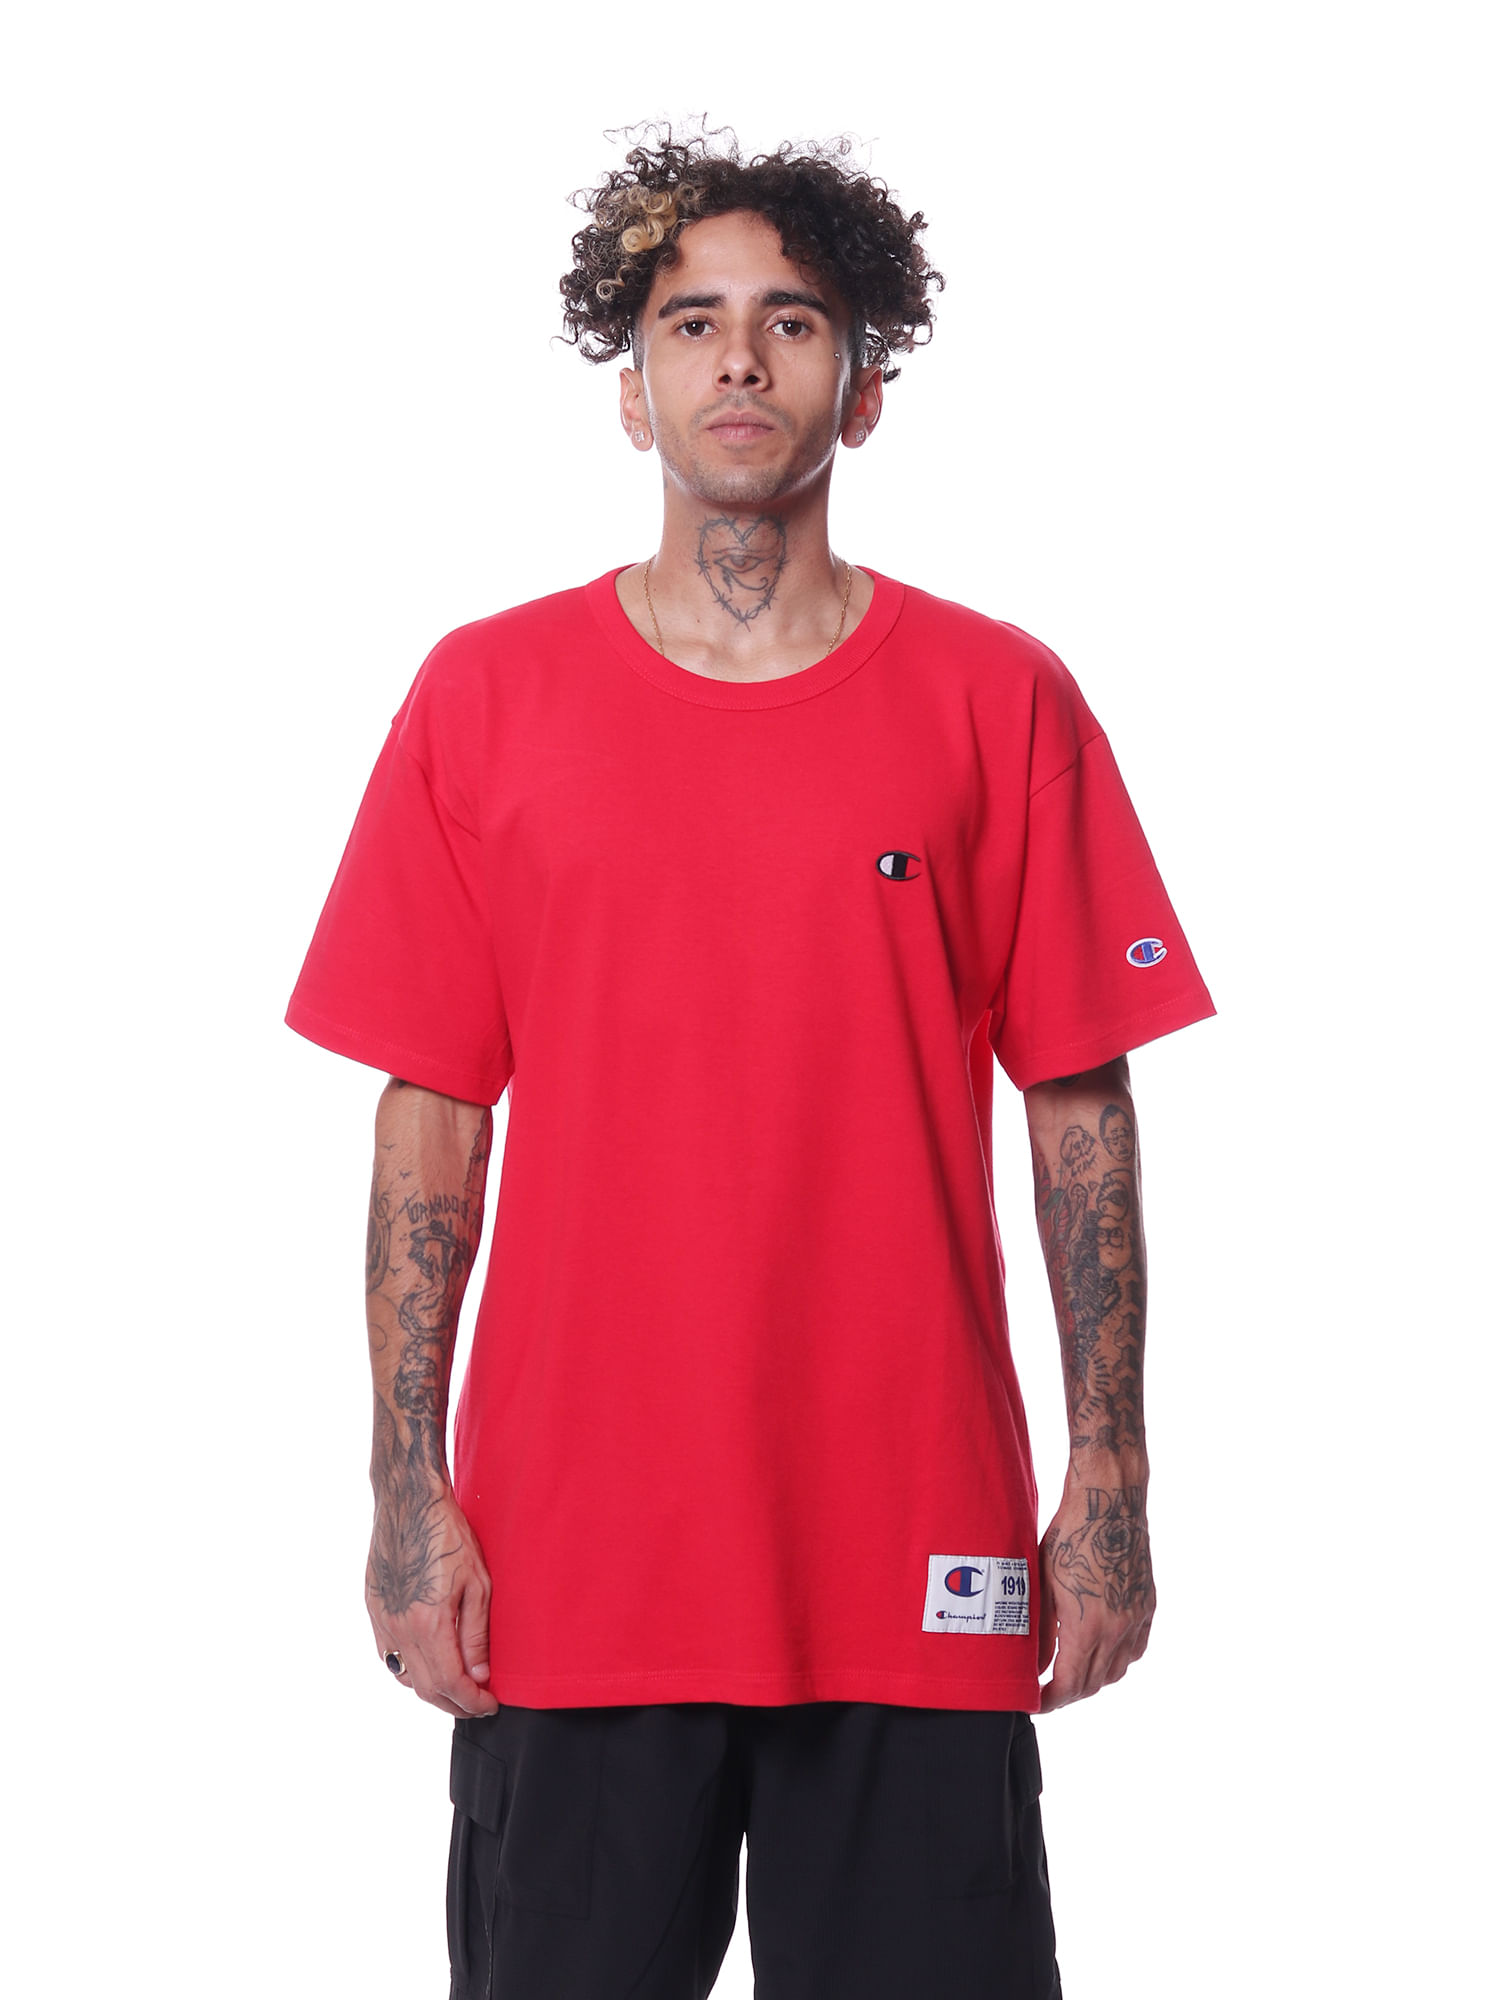 Camiseta-champion-logo-bordado-Vermelho